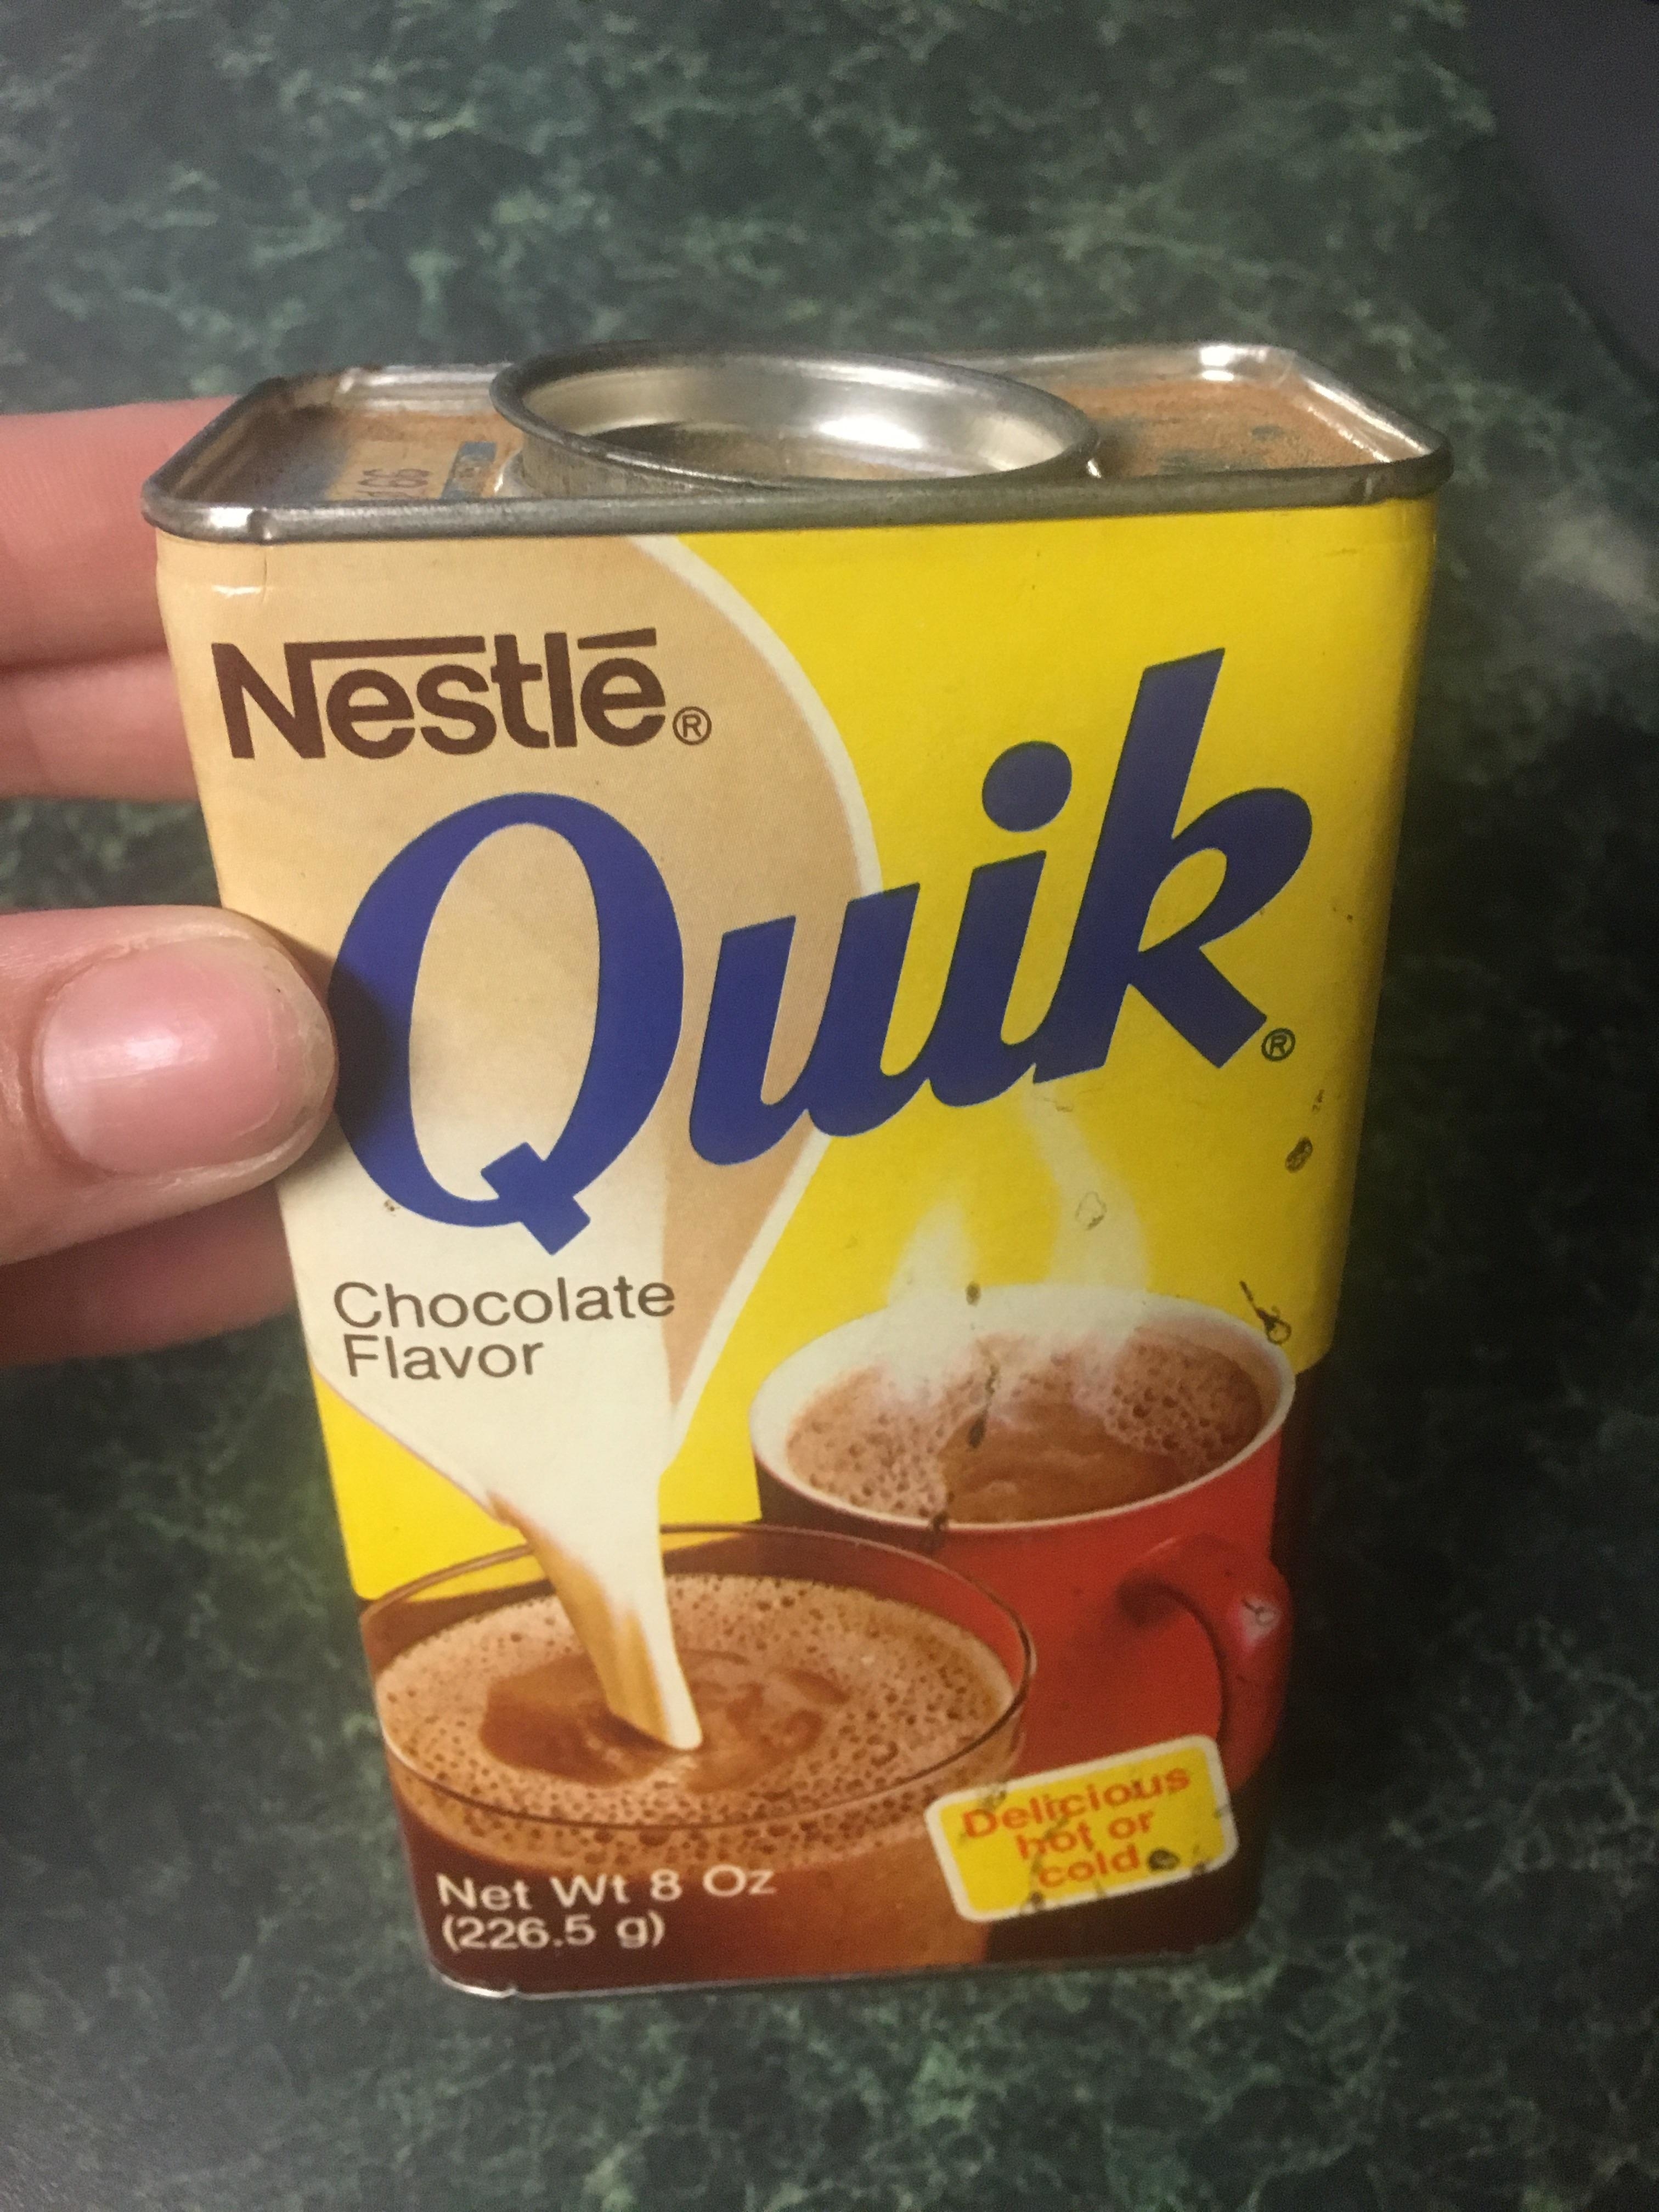 A container of Nestlé Quik chocolate flavor mix